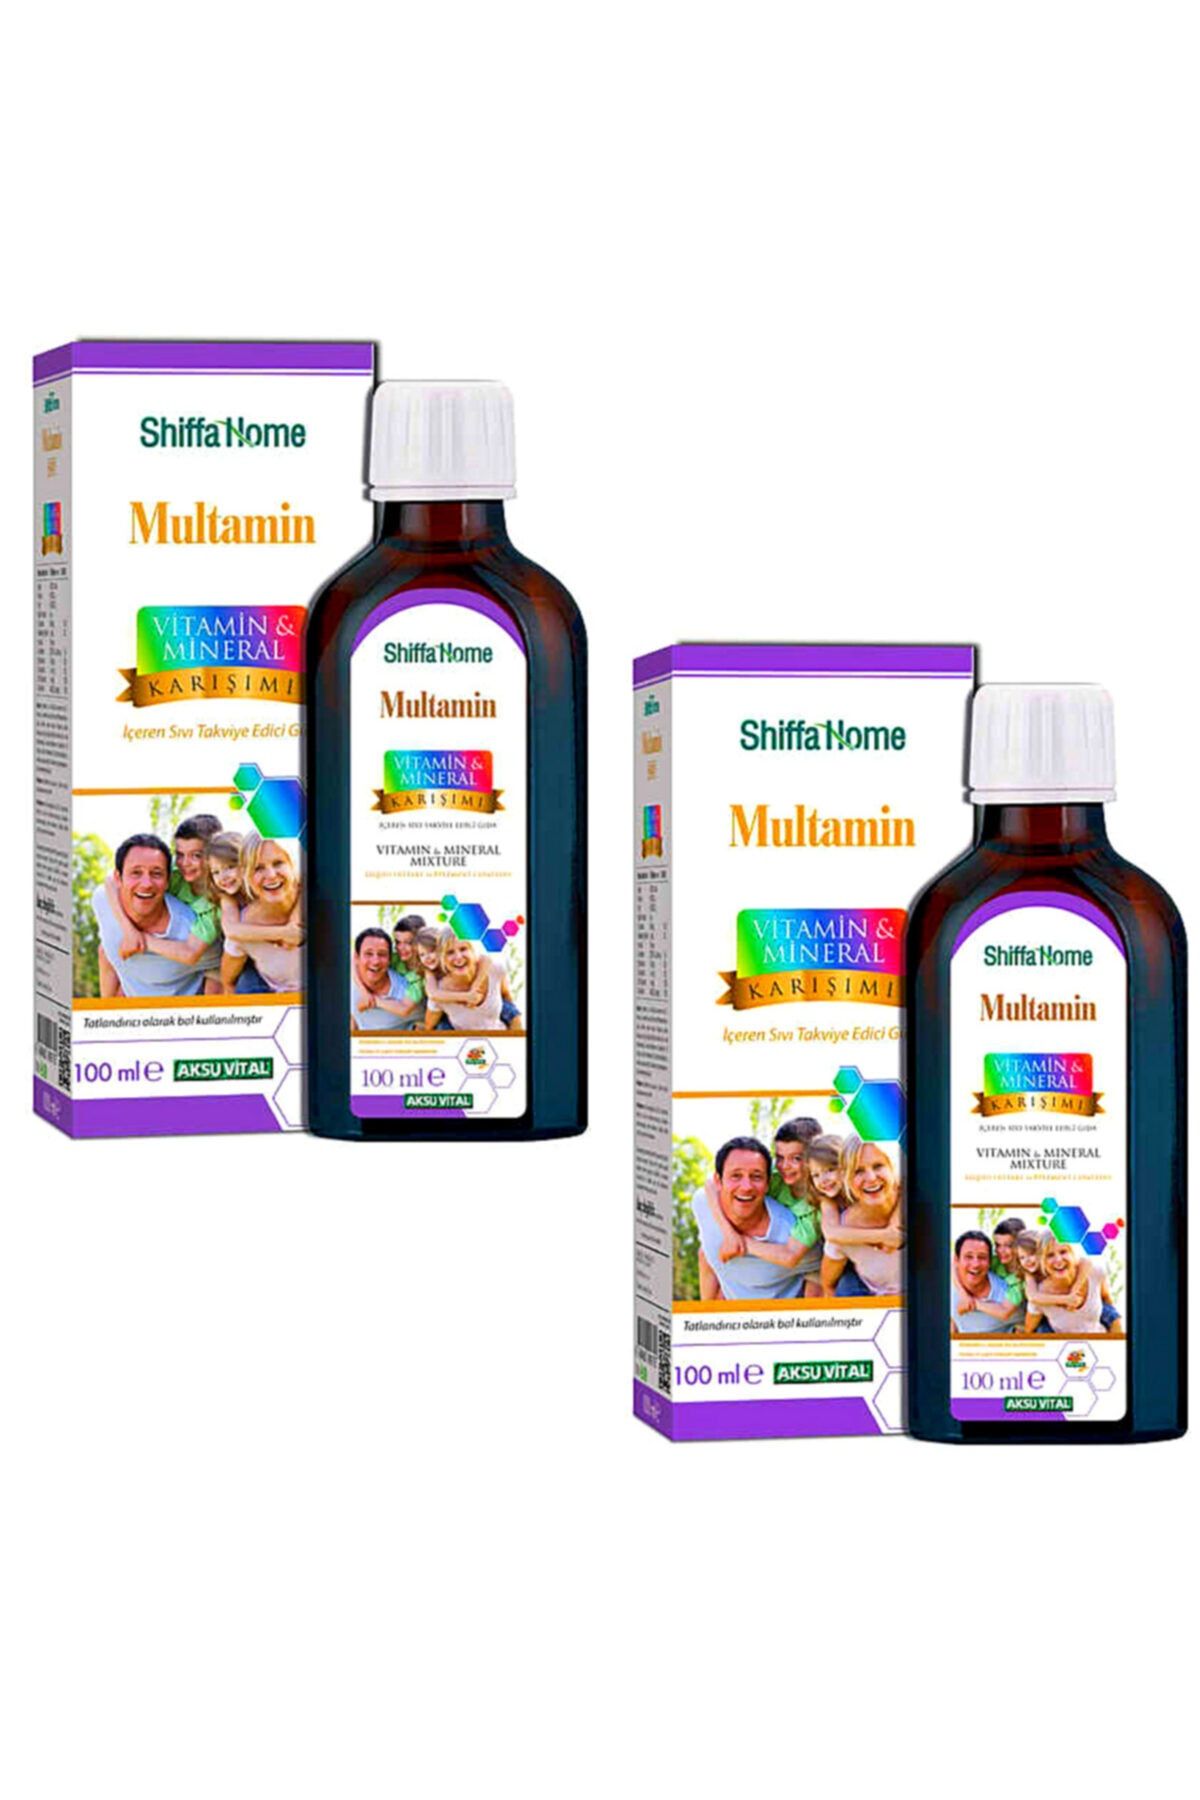 Shiffa Home Multamin Vitamin & Mineral Karışımı x 2 Adet